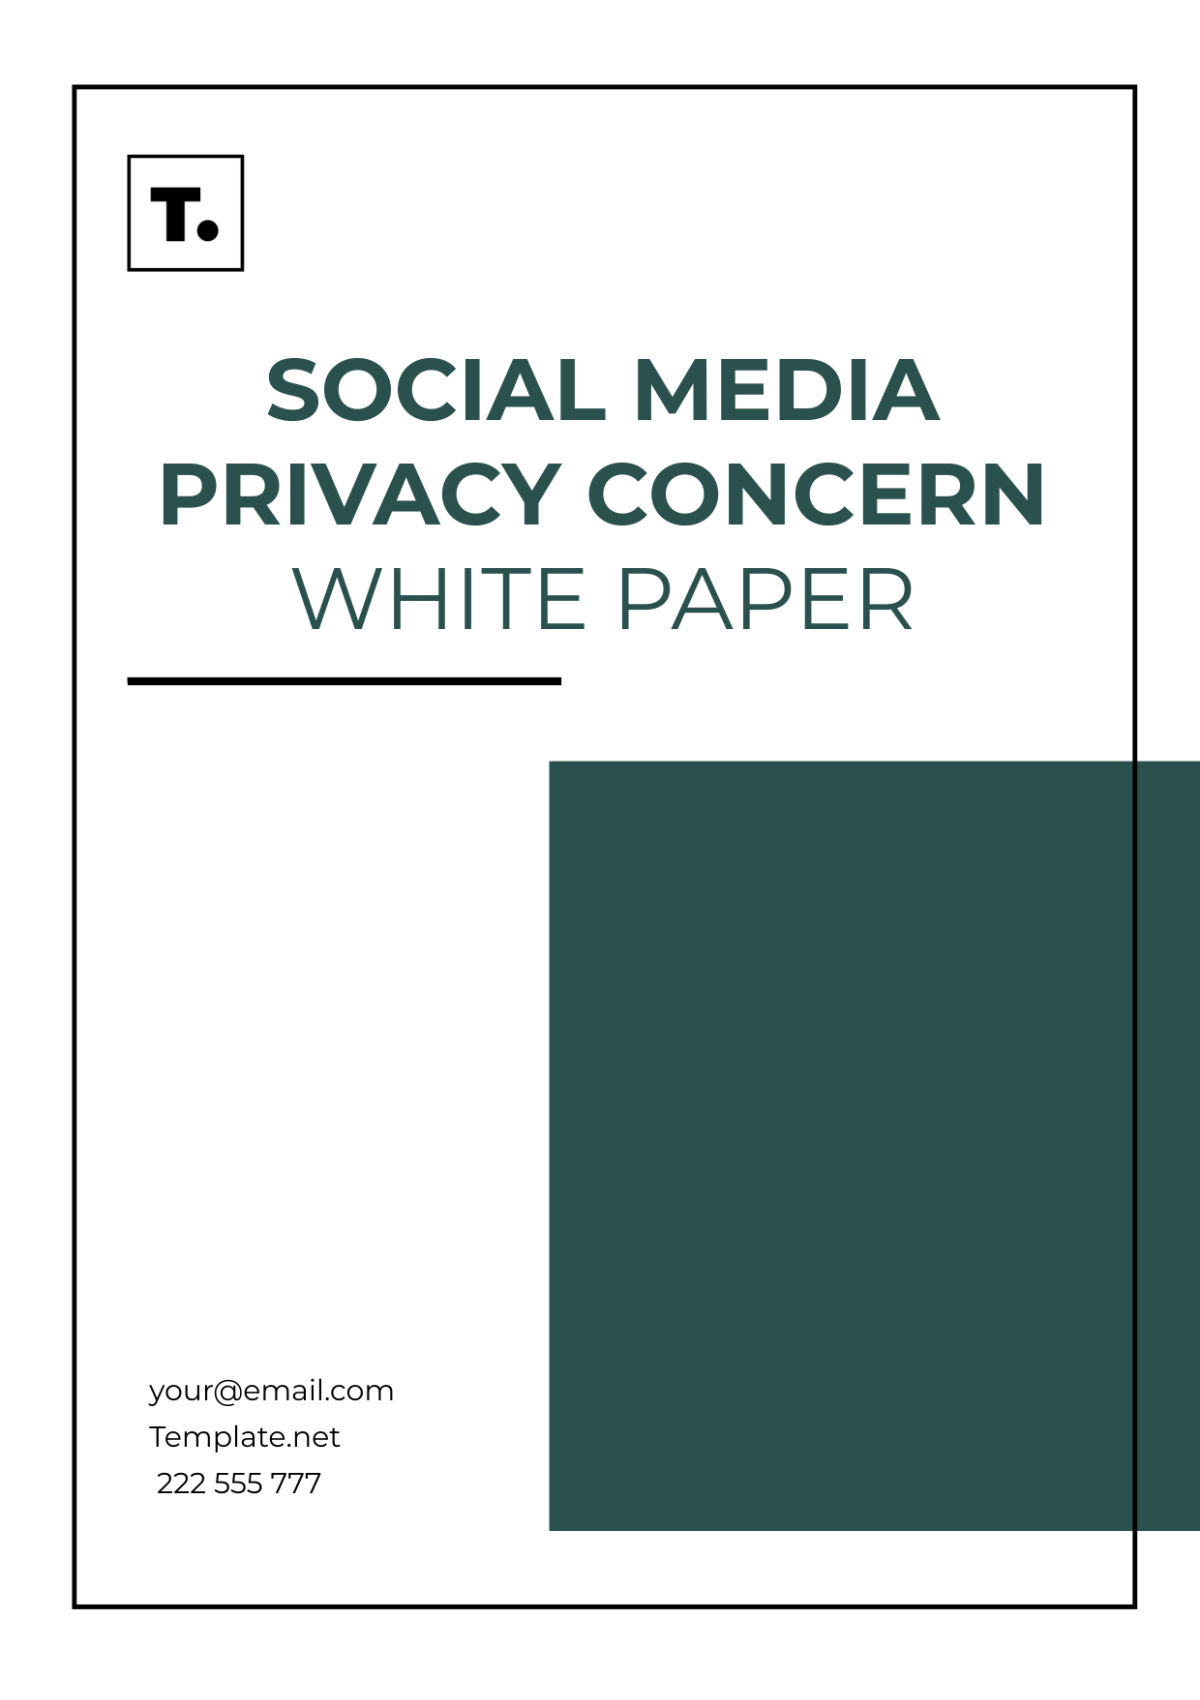 Social Media Privacy Concern White Paper Template